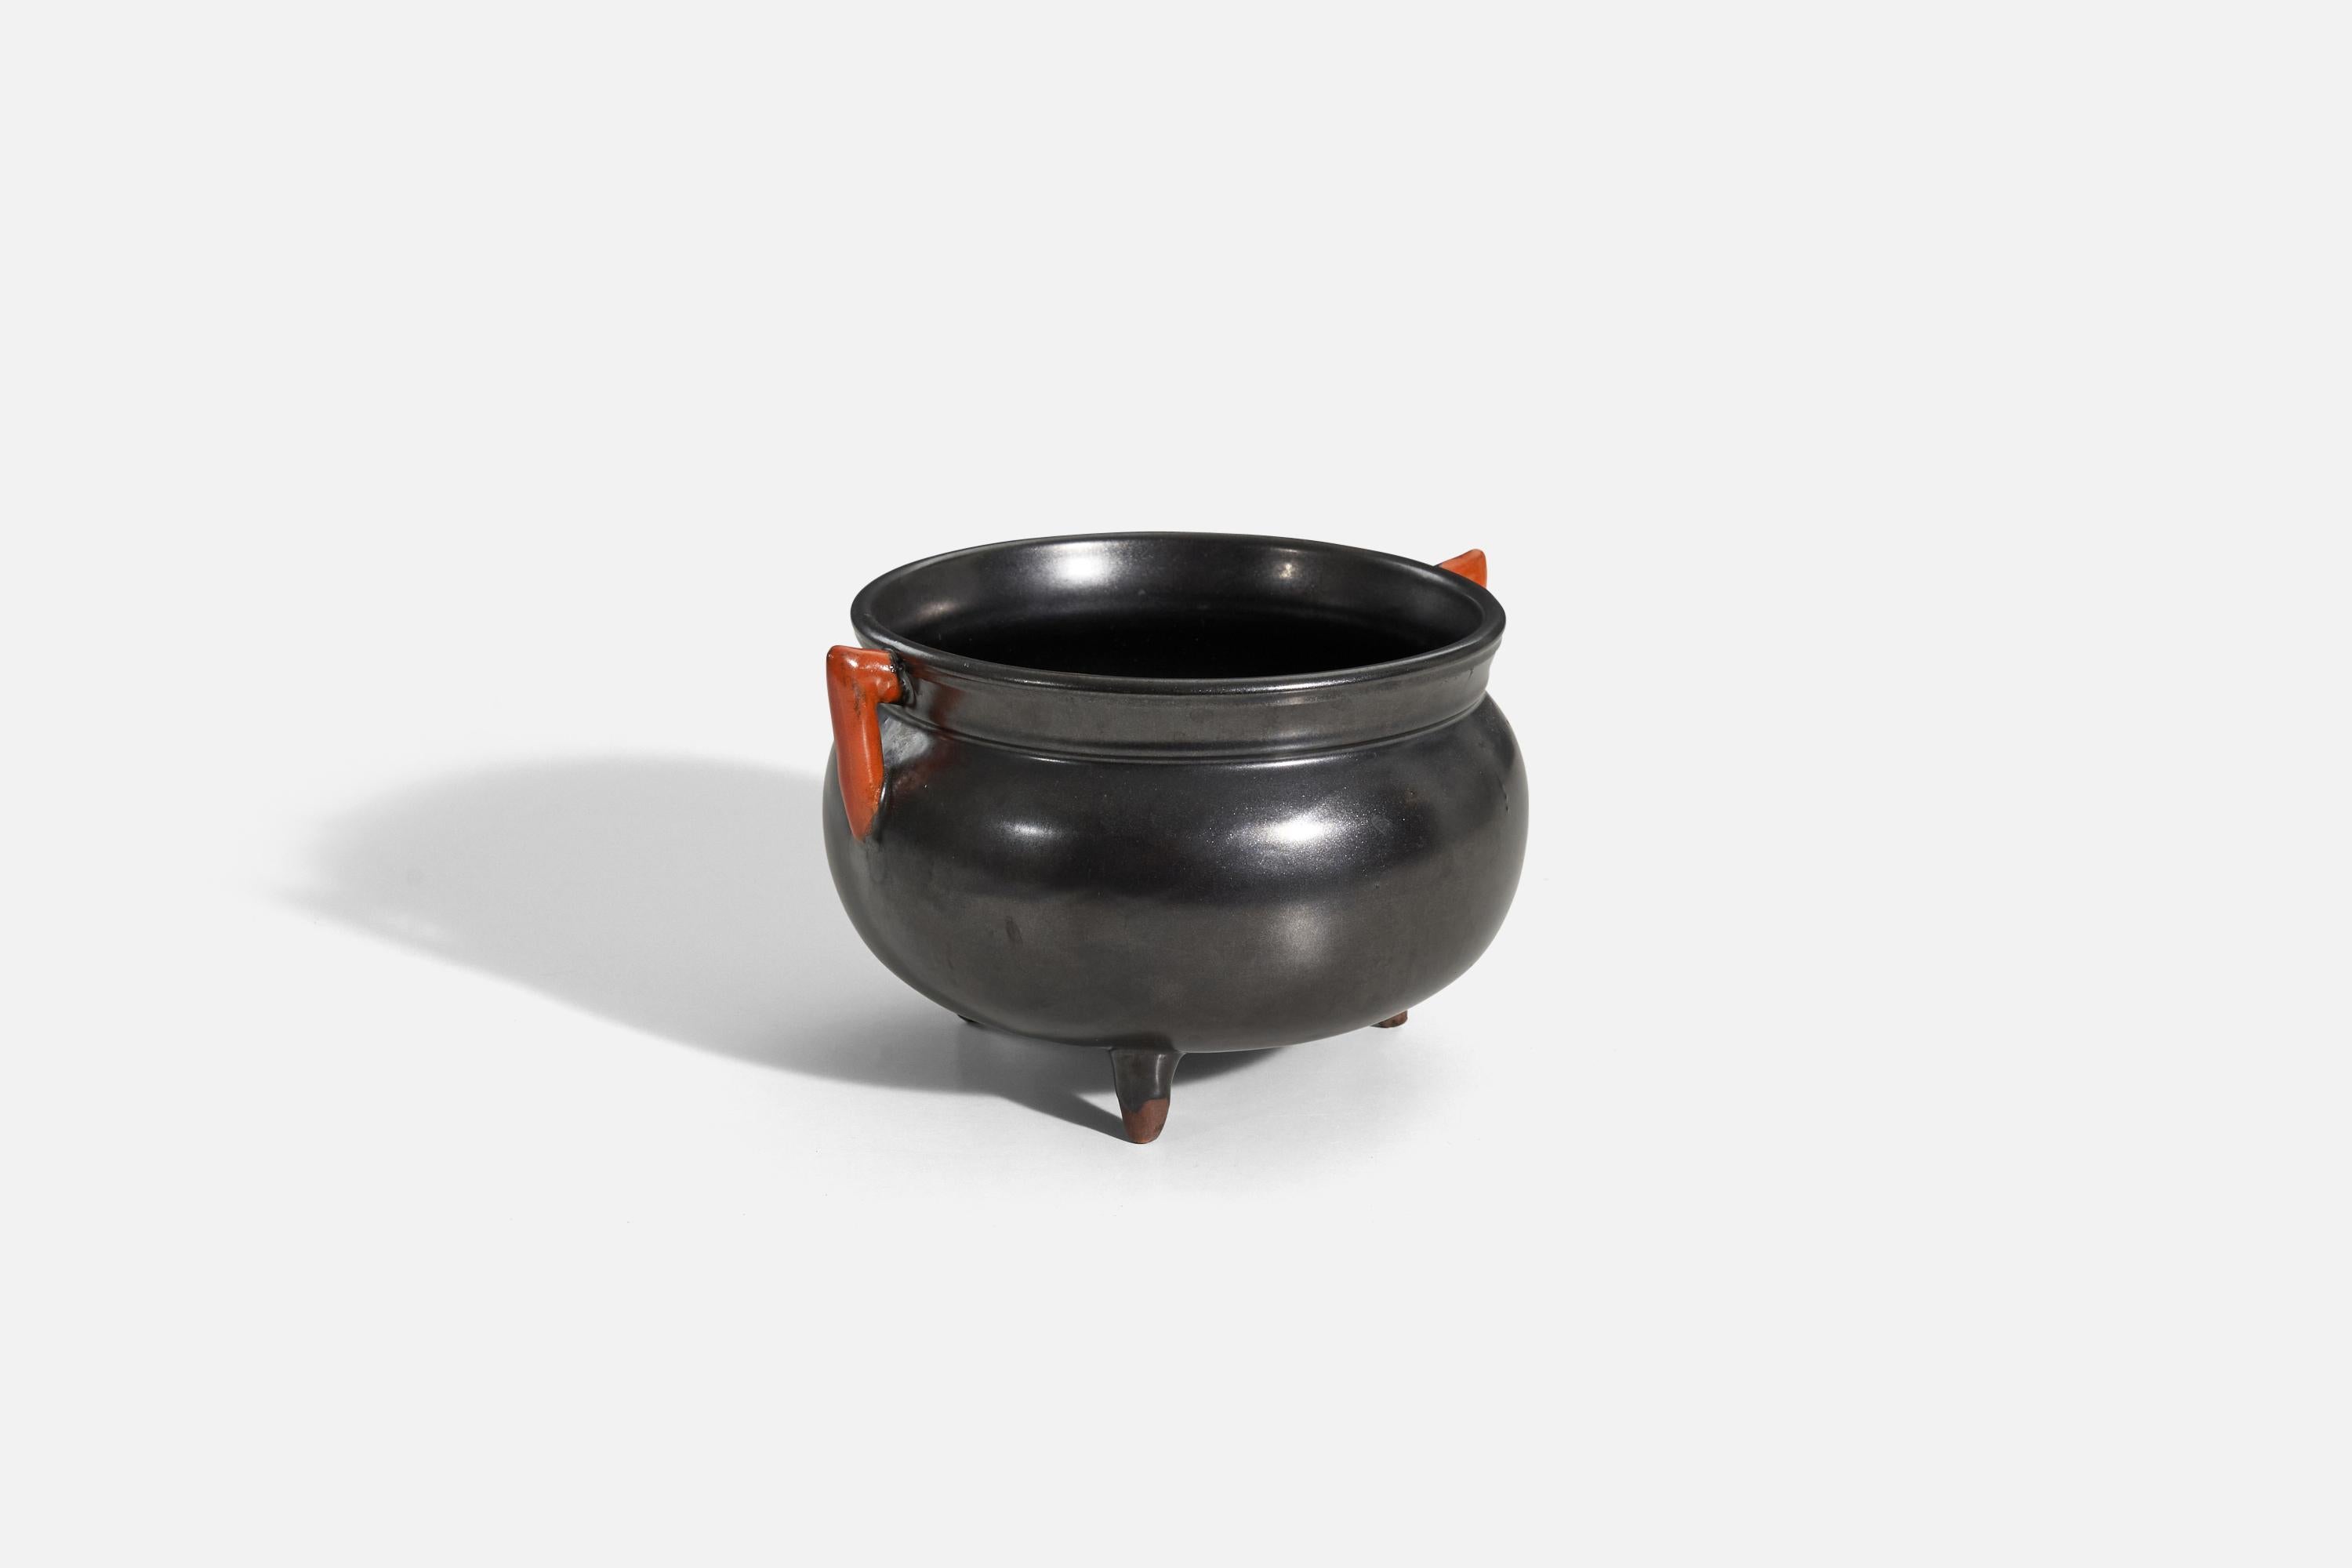 Scandinavian Modern Upsala-Ekeby, Vase, Black and Orange-Glazed Earthenware, Sweden, 1940s For Sale